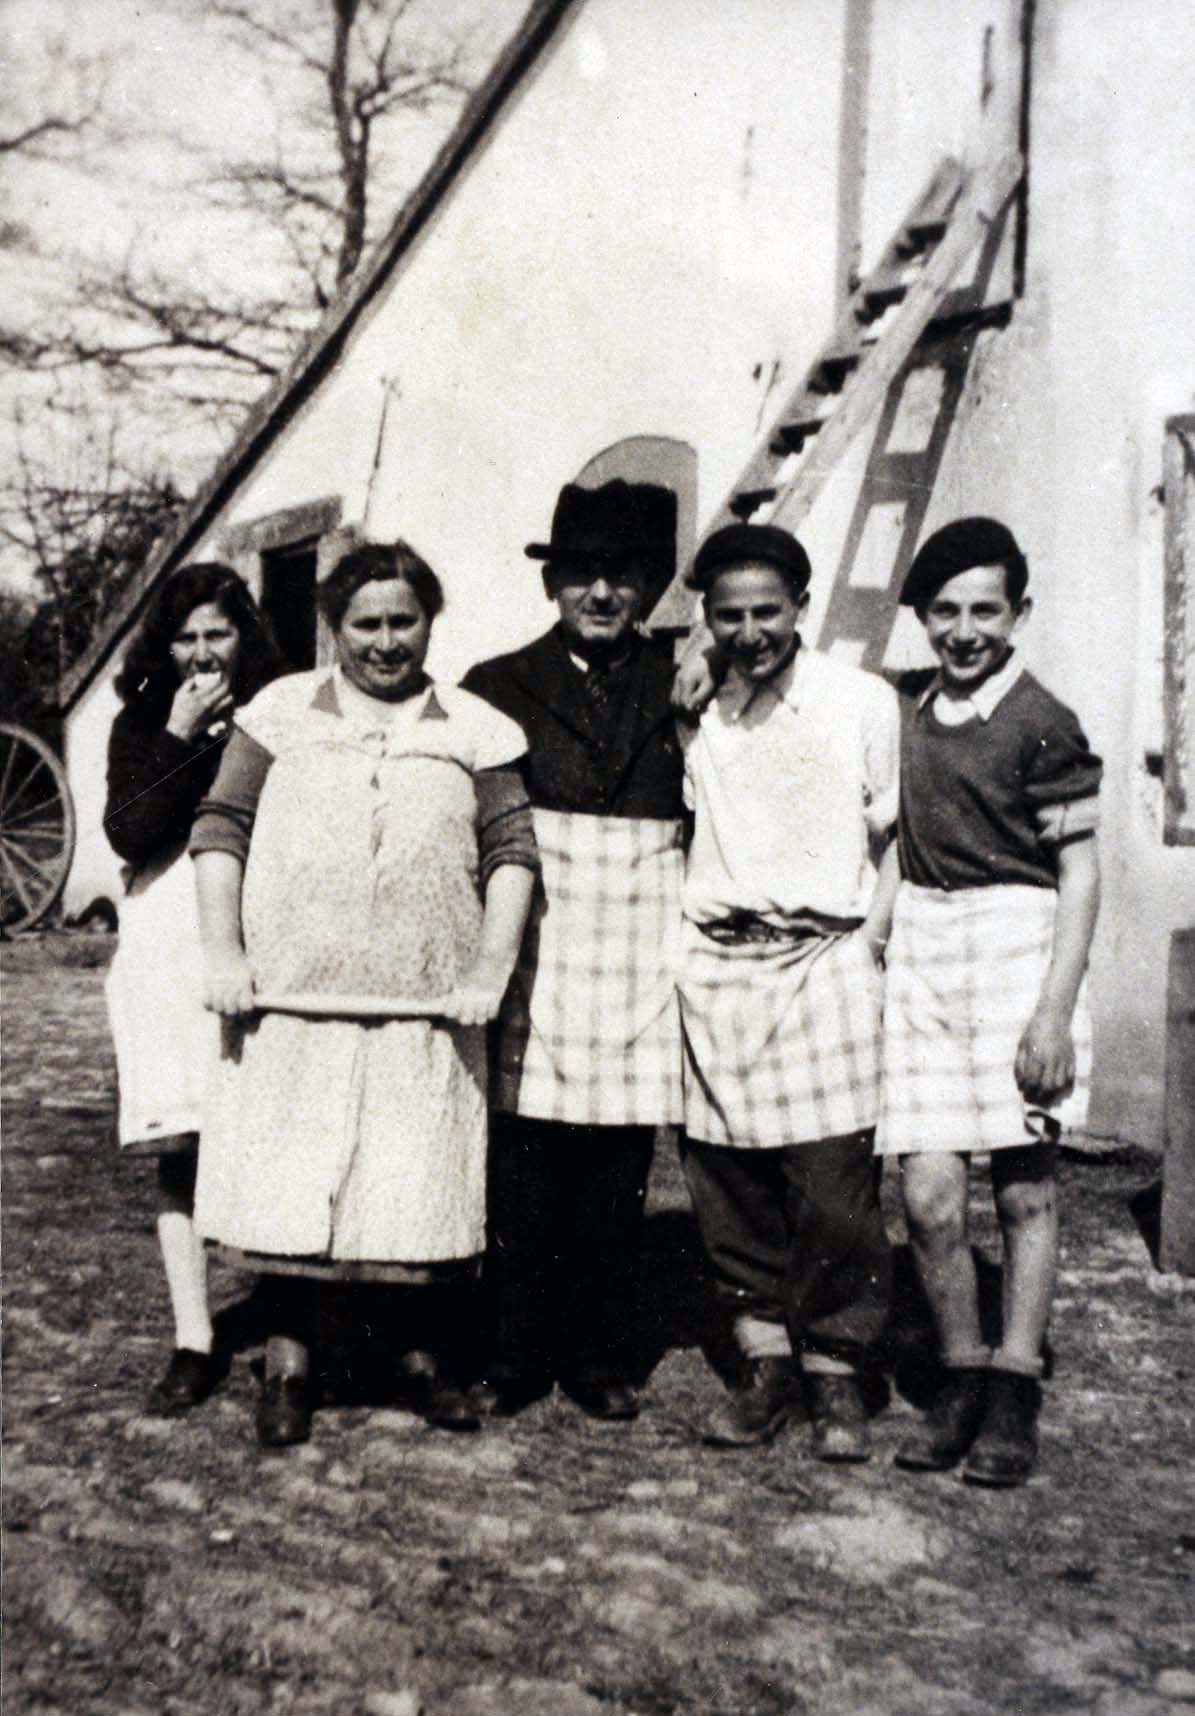 Pujaudran, Francia – foto de la familia Rudel durante el horneado de matzot, 1943